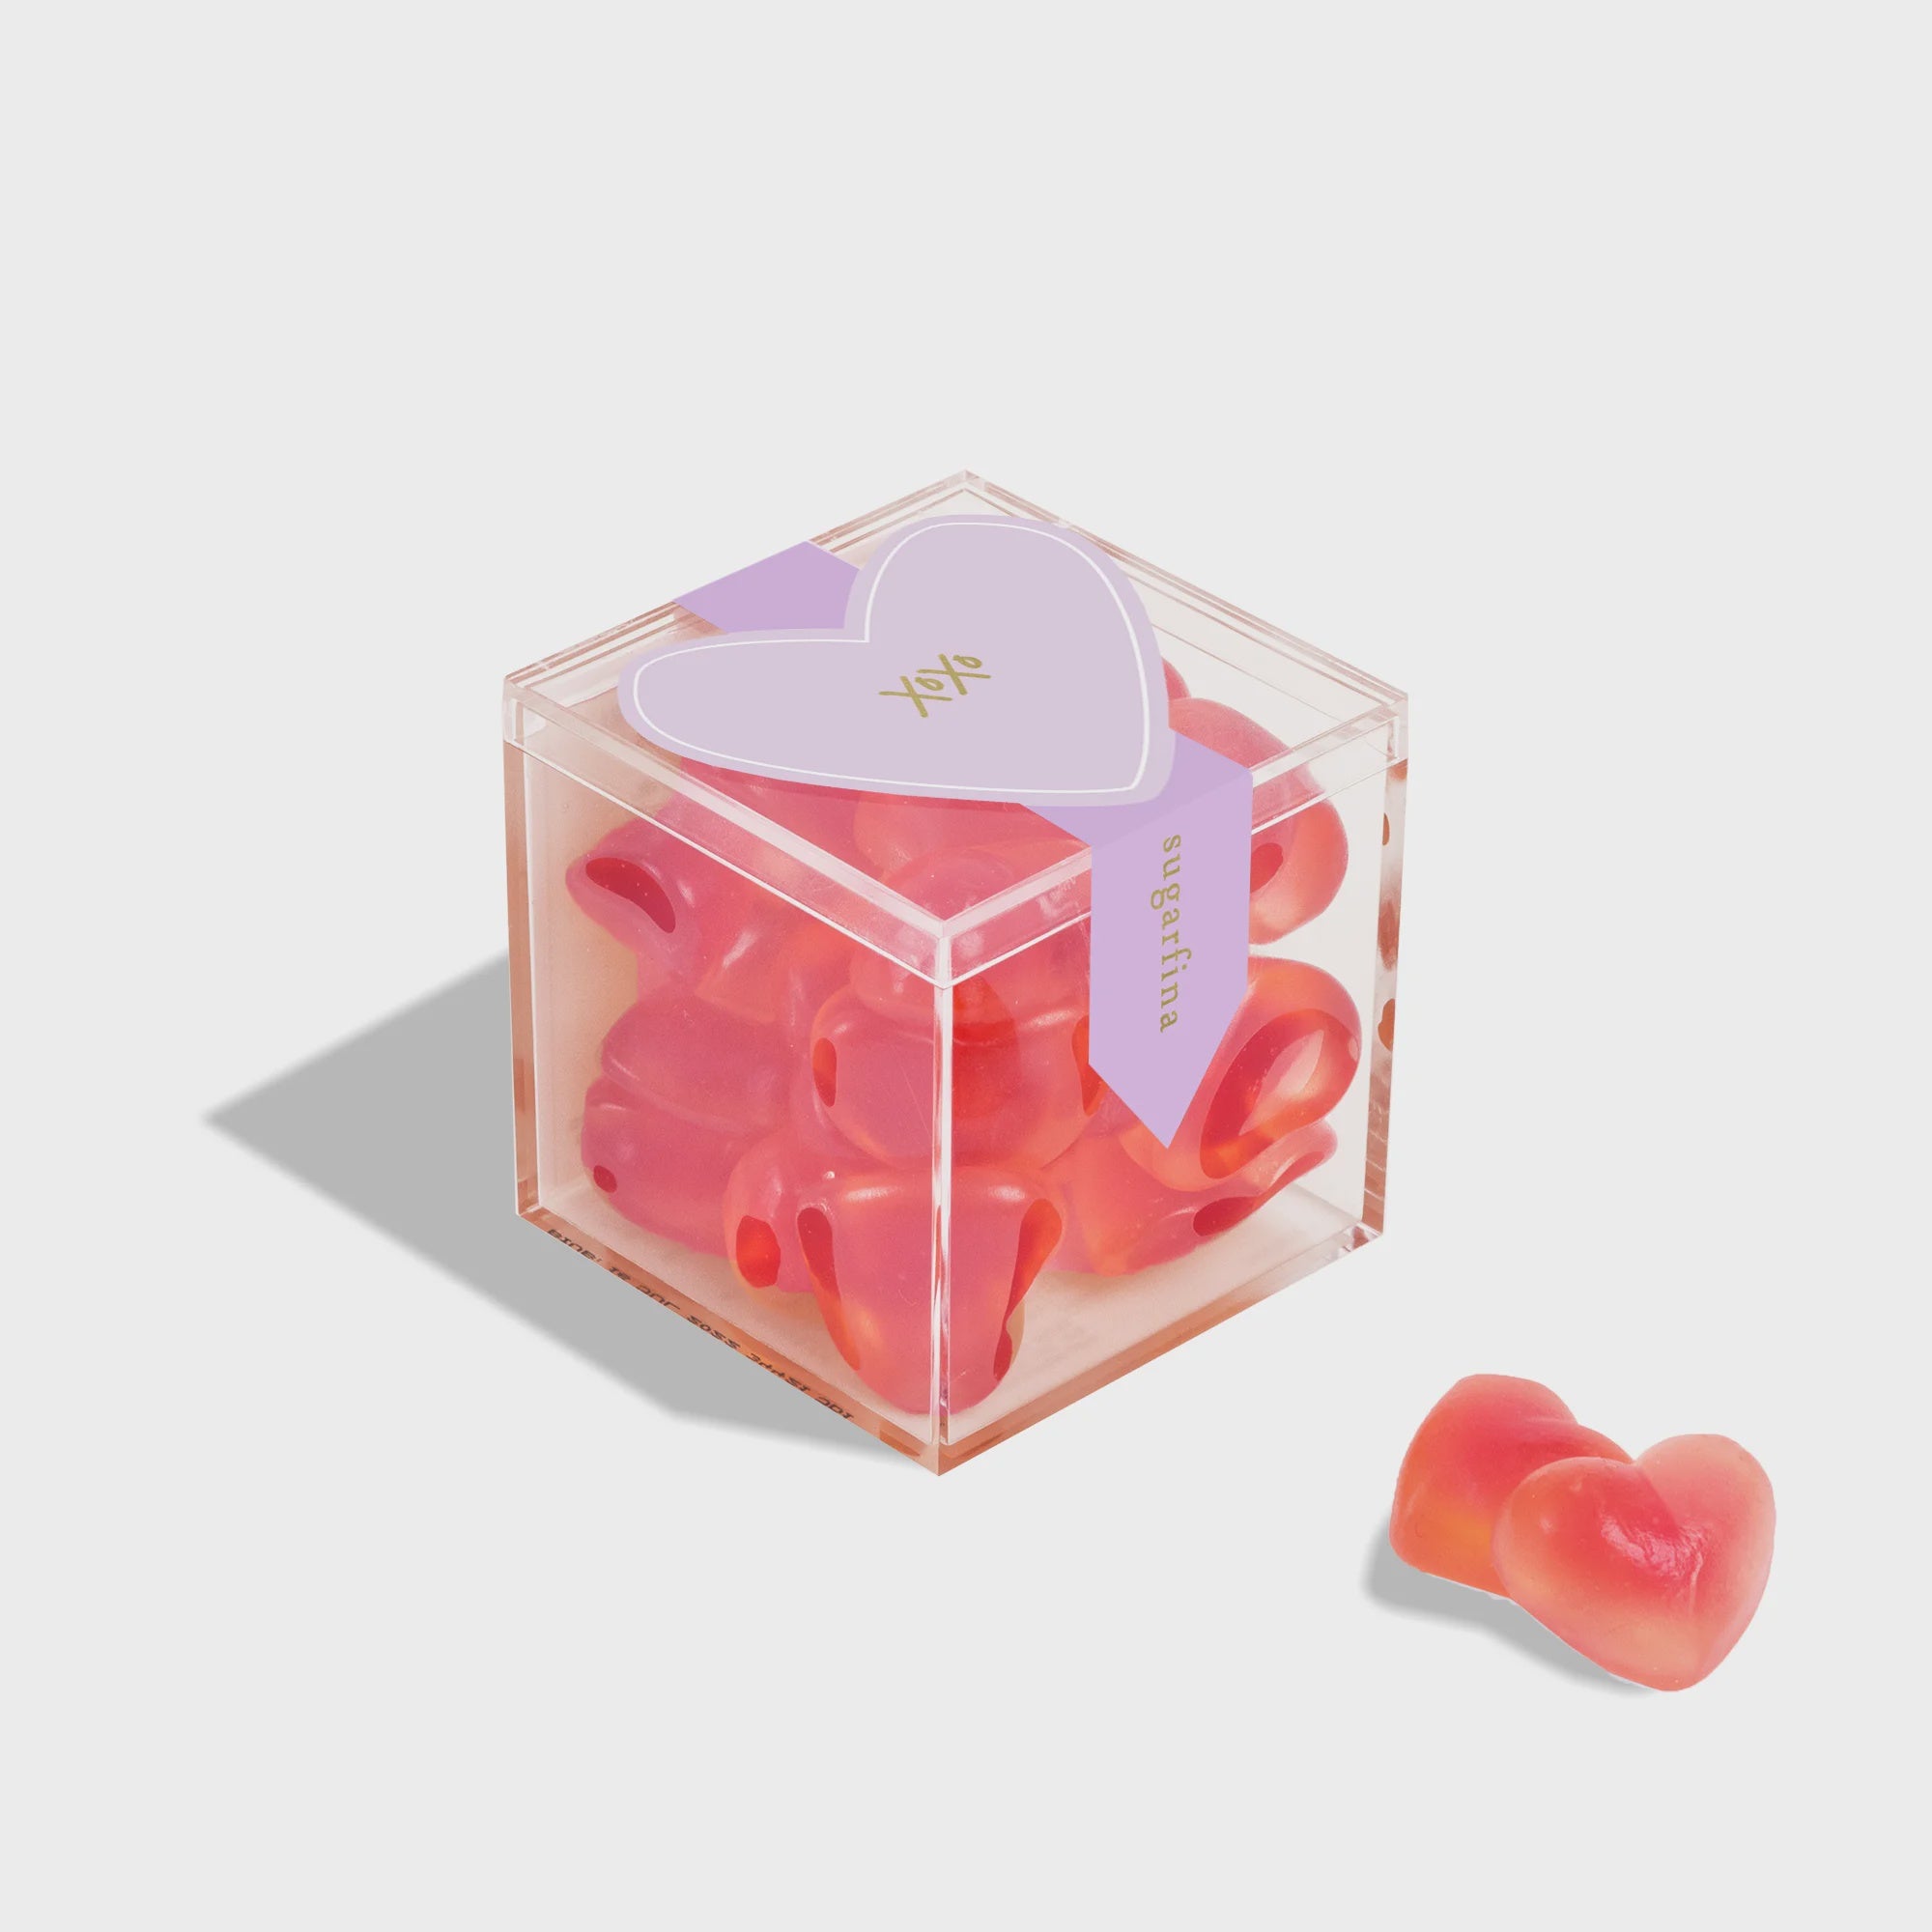 The XOXO Strawberry Hearts by Sugarfina